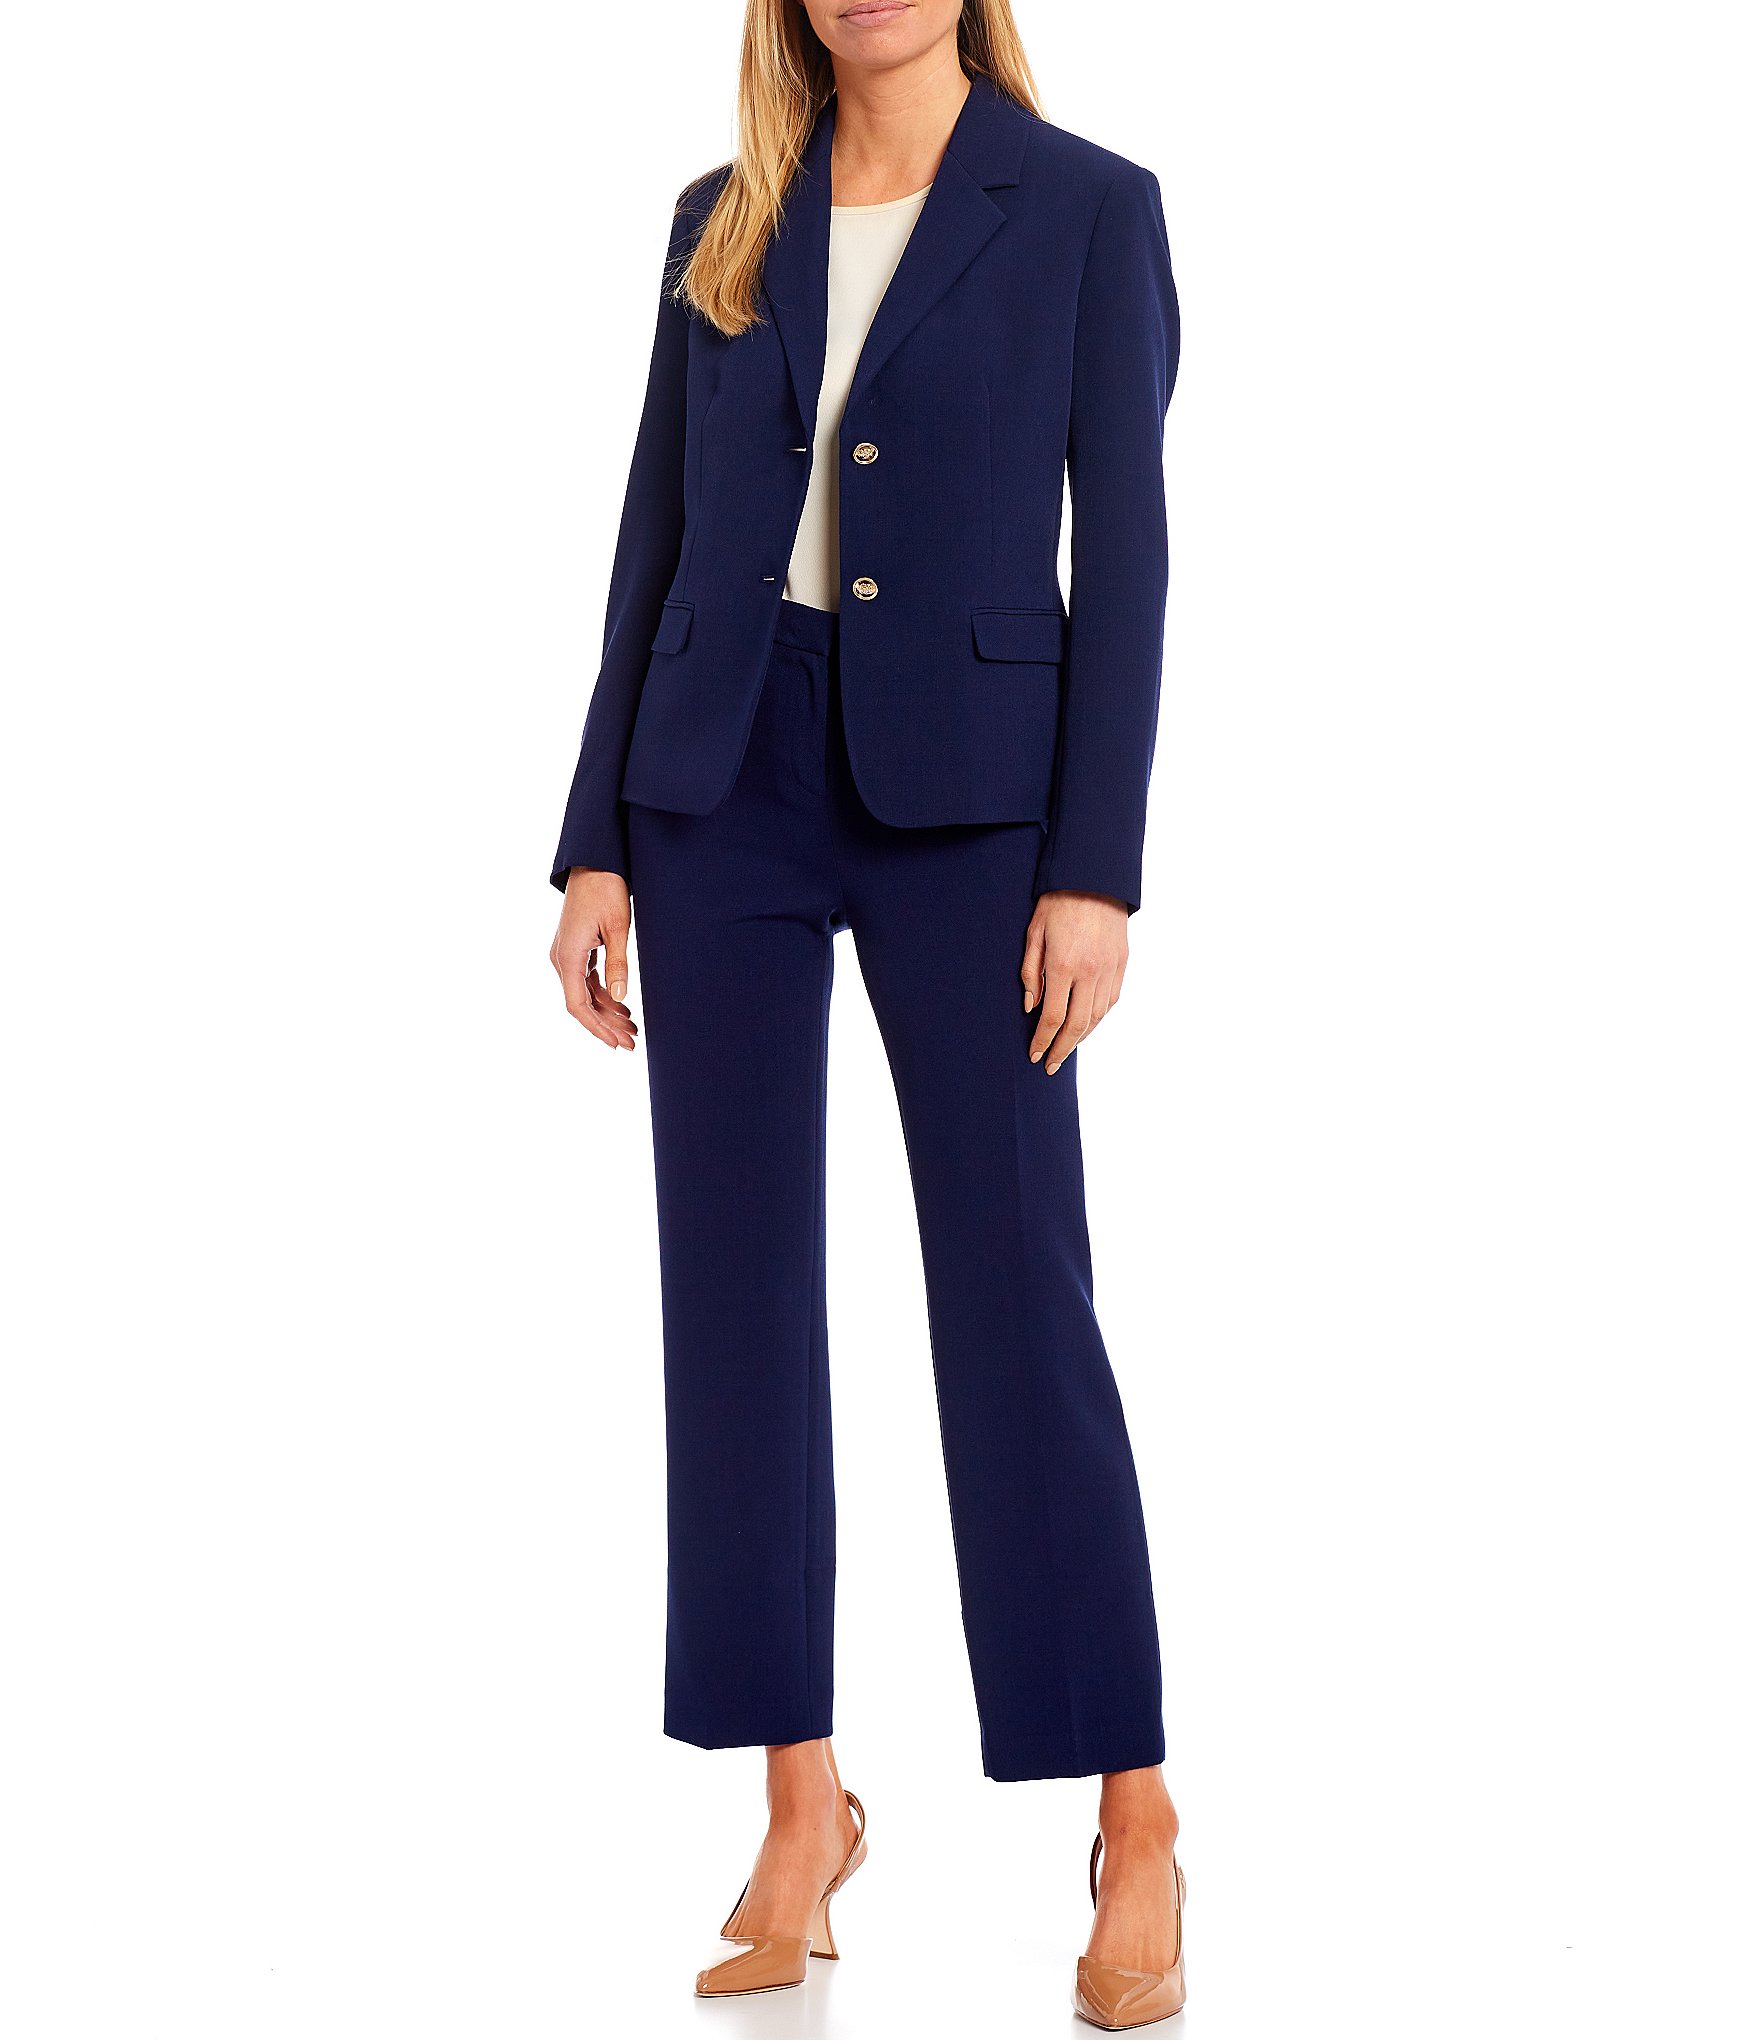 Blue Dressy Suits For Women Dillard's, 46% OFF